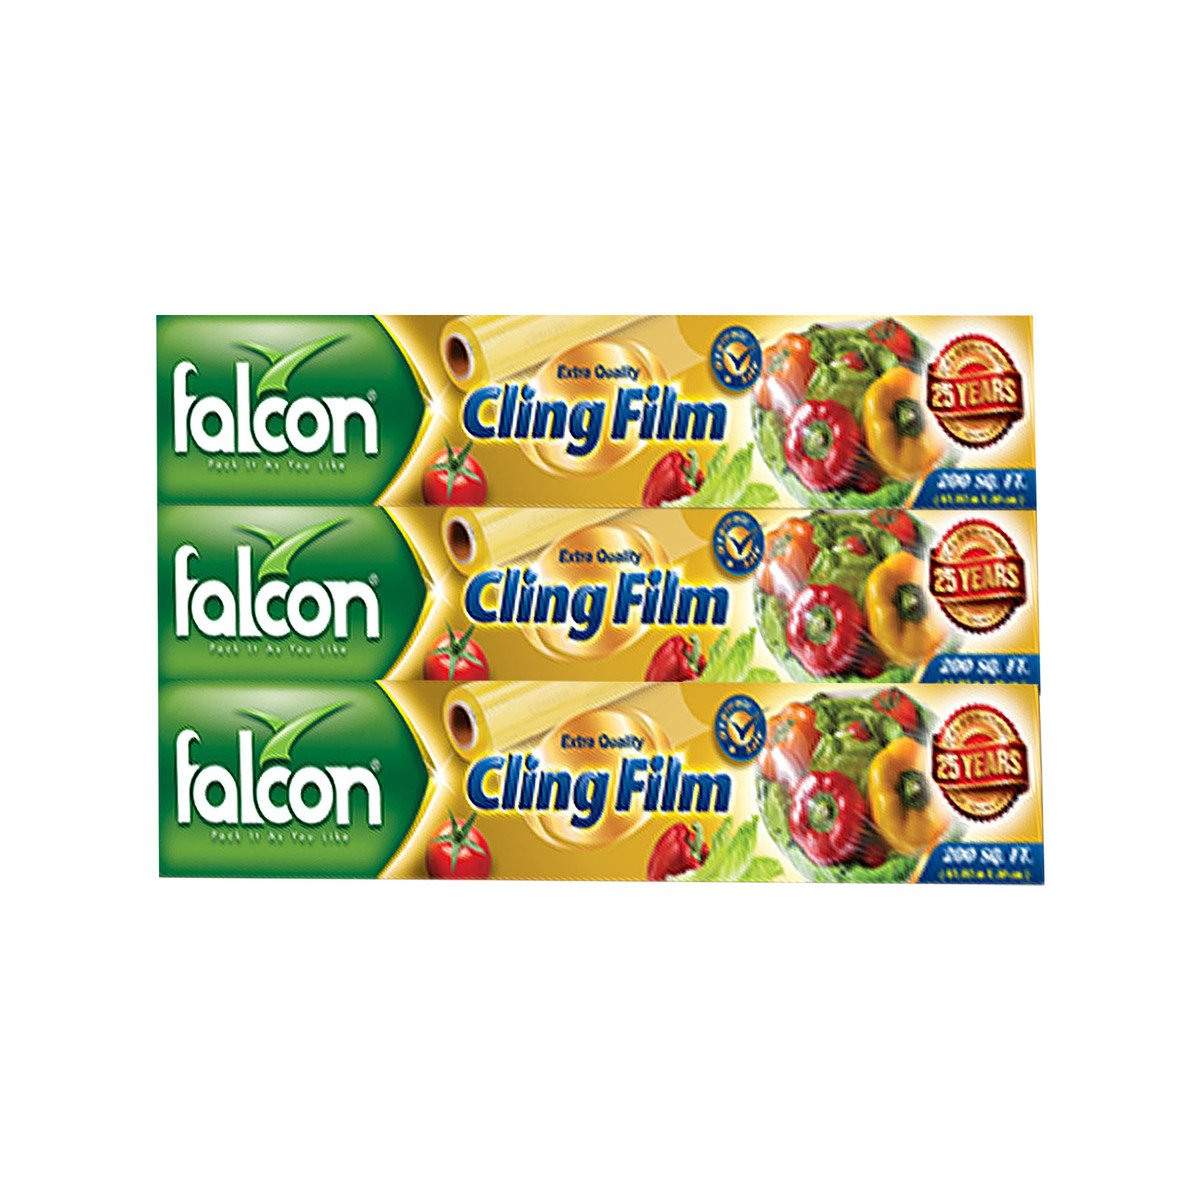 Falcon Cling Film 200sq ft Value Pack 3 pcs